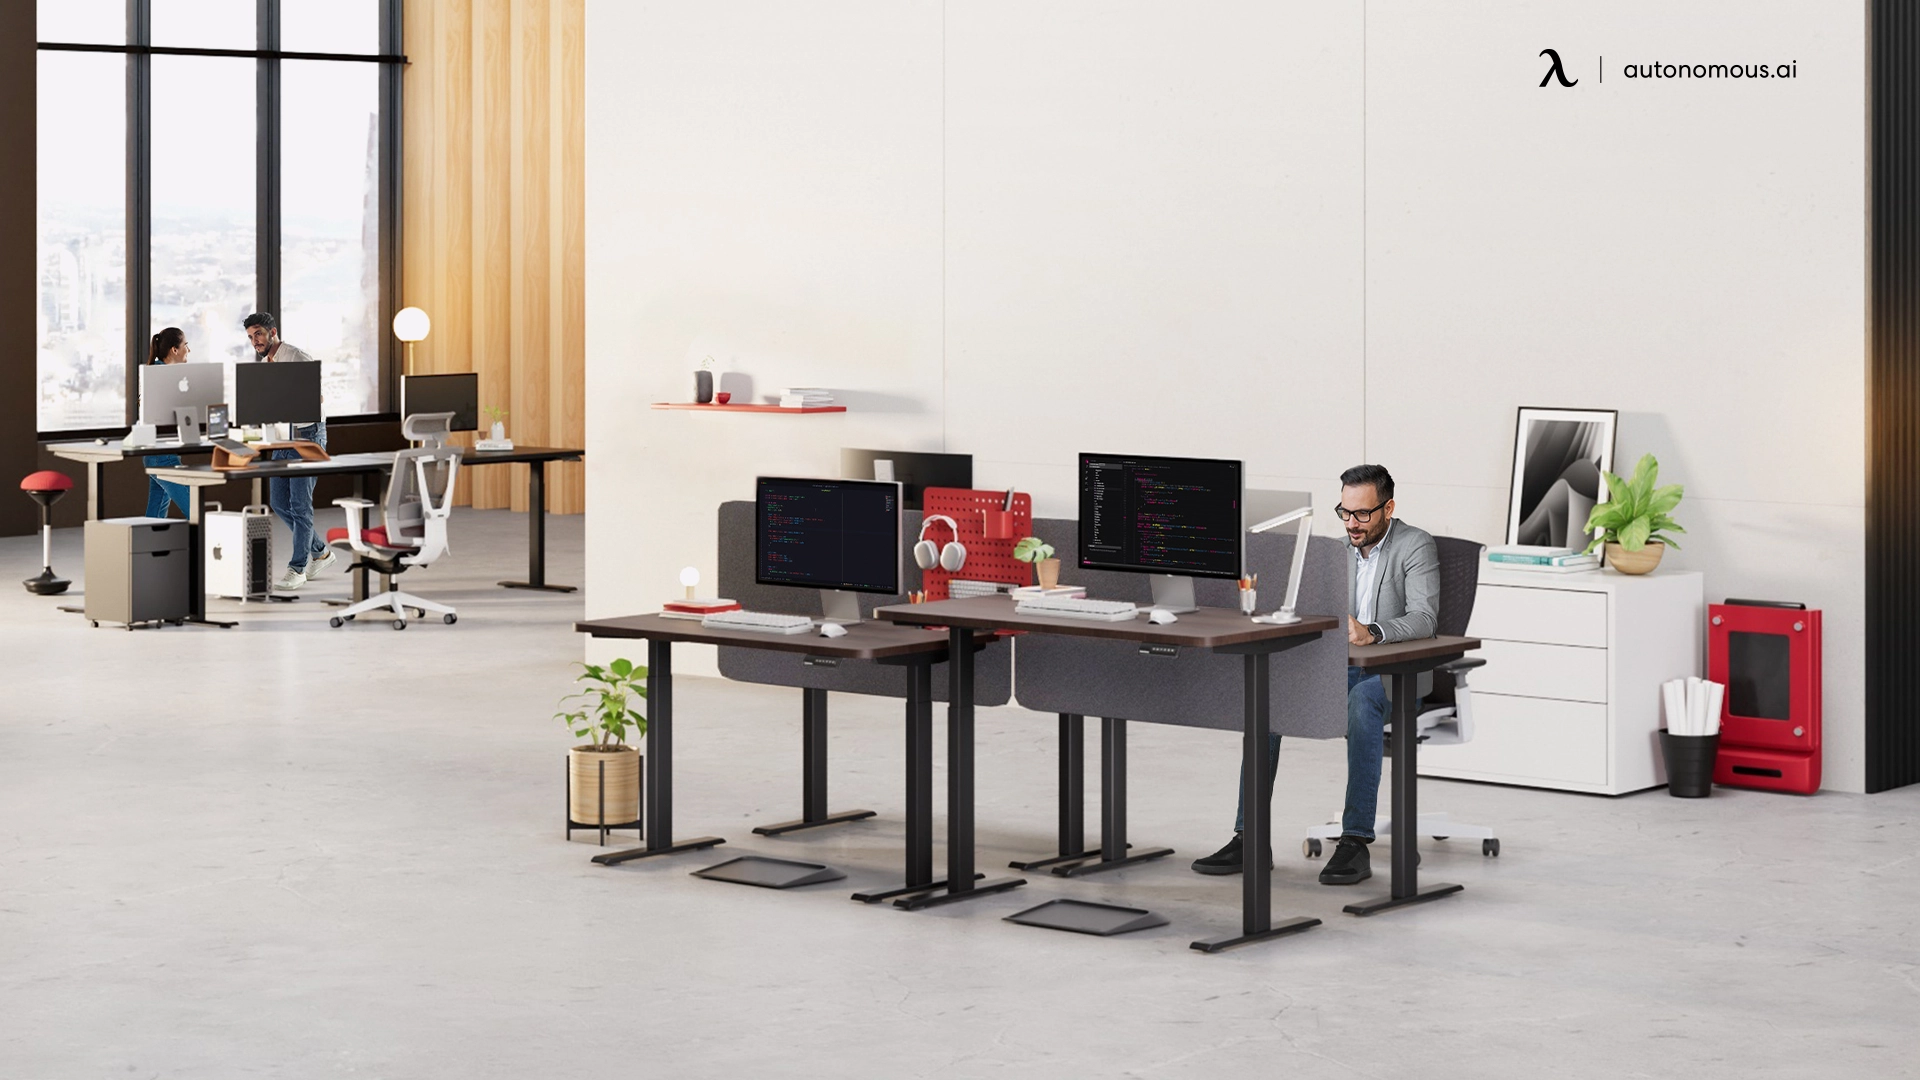 Autonomous Is Your One-stop Shop for Office Furniture 